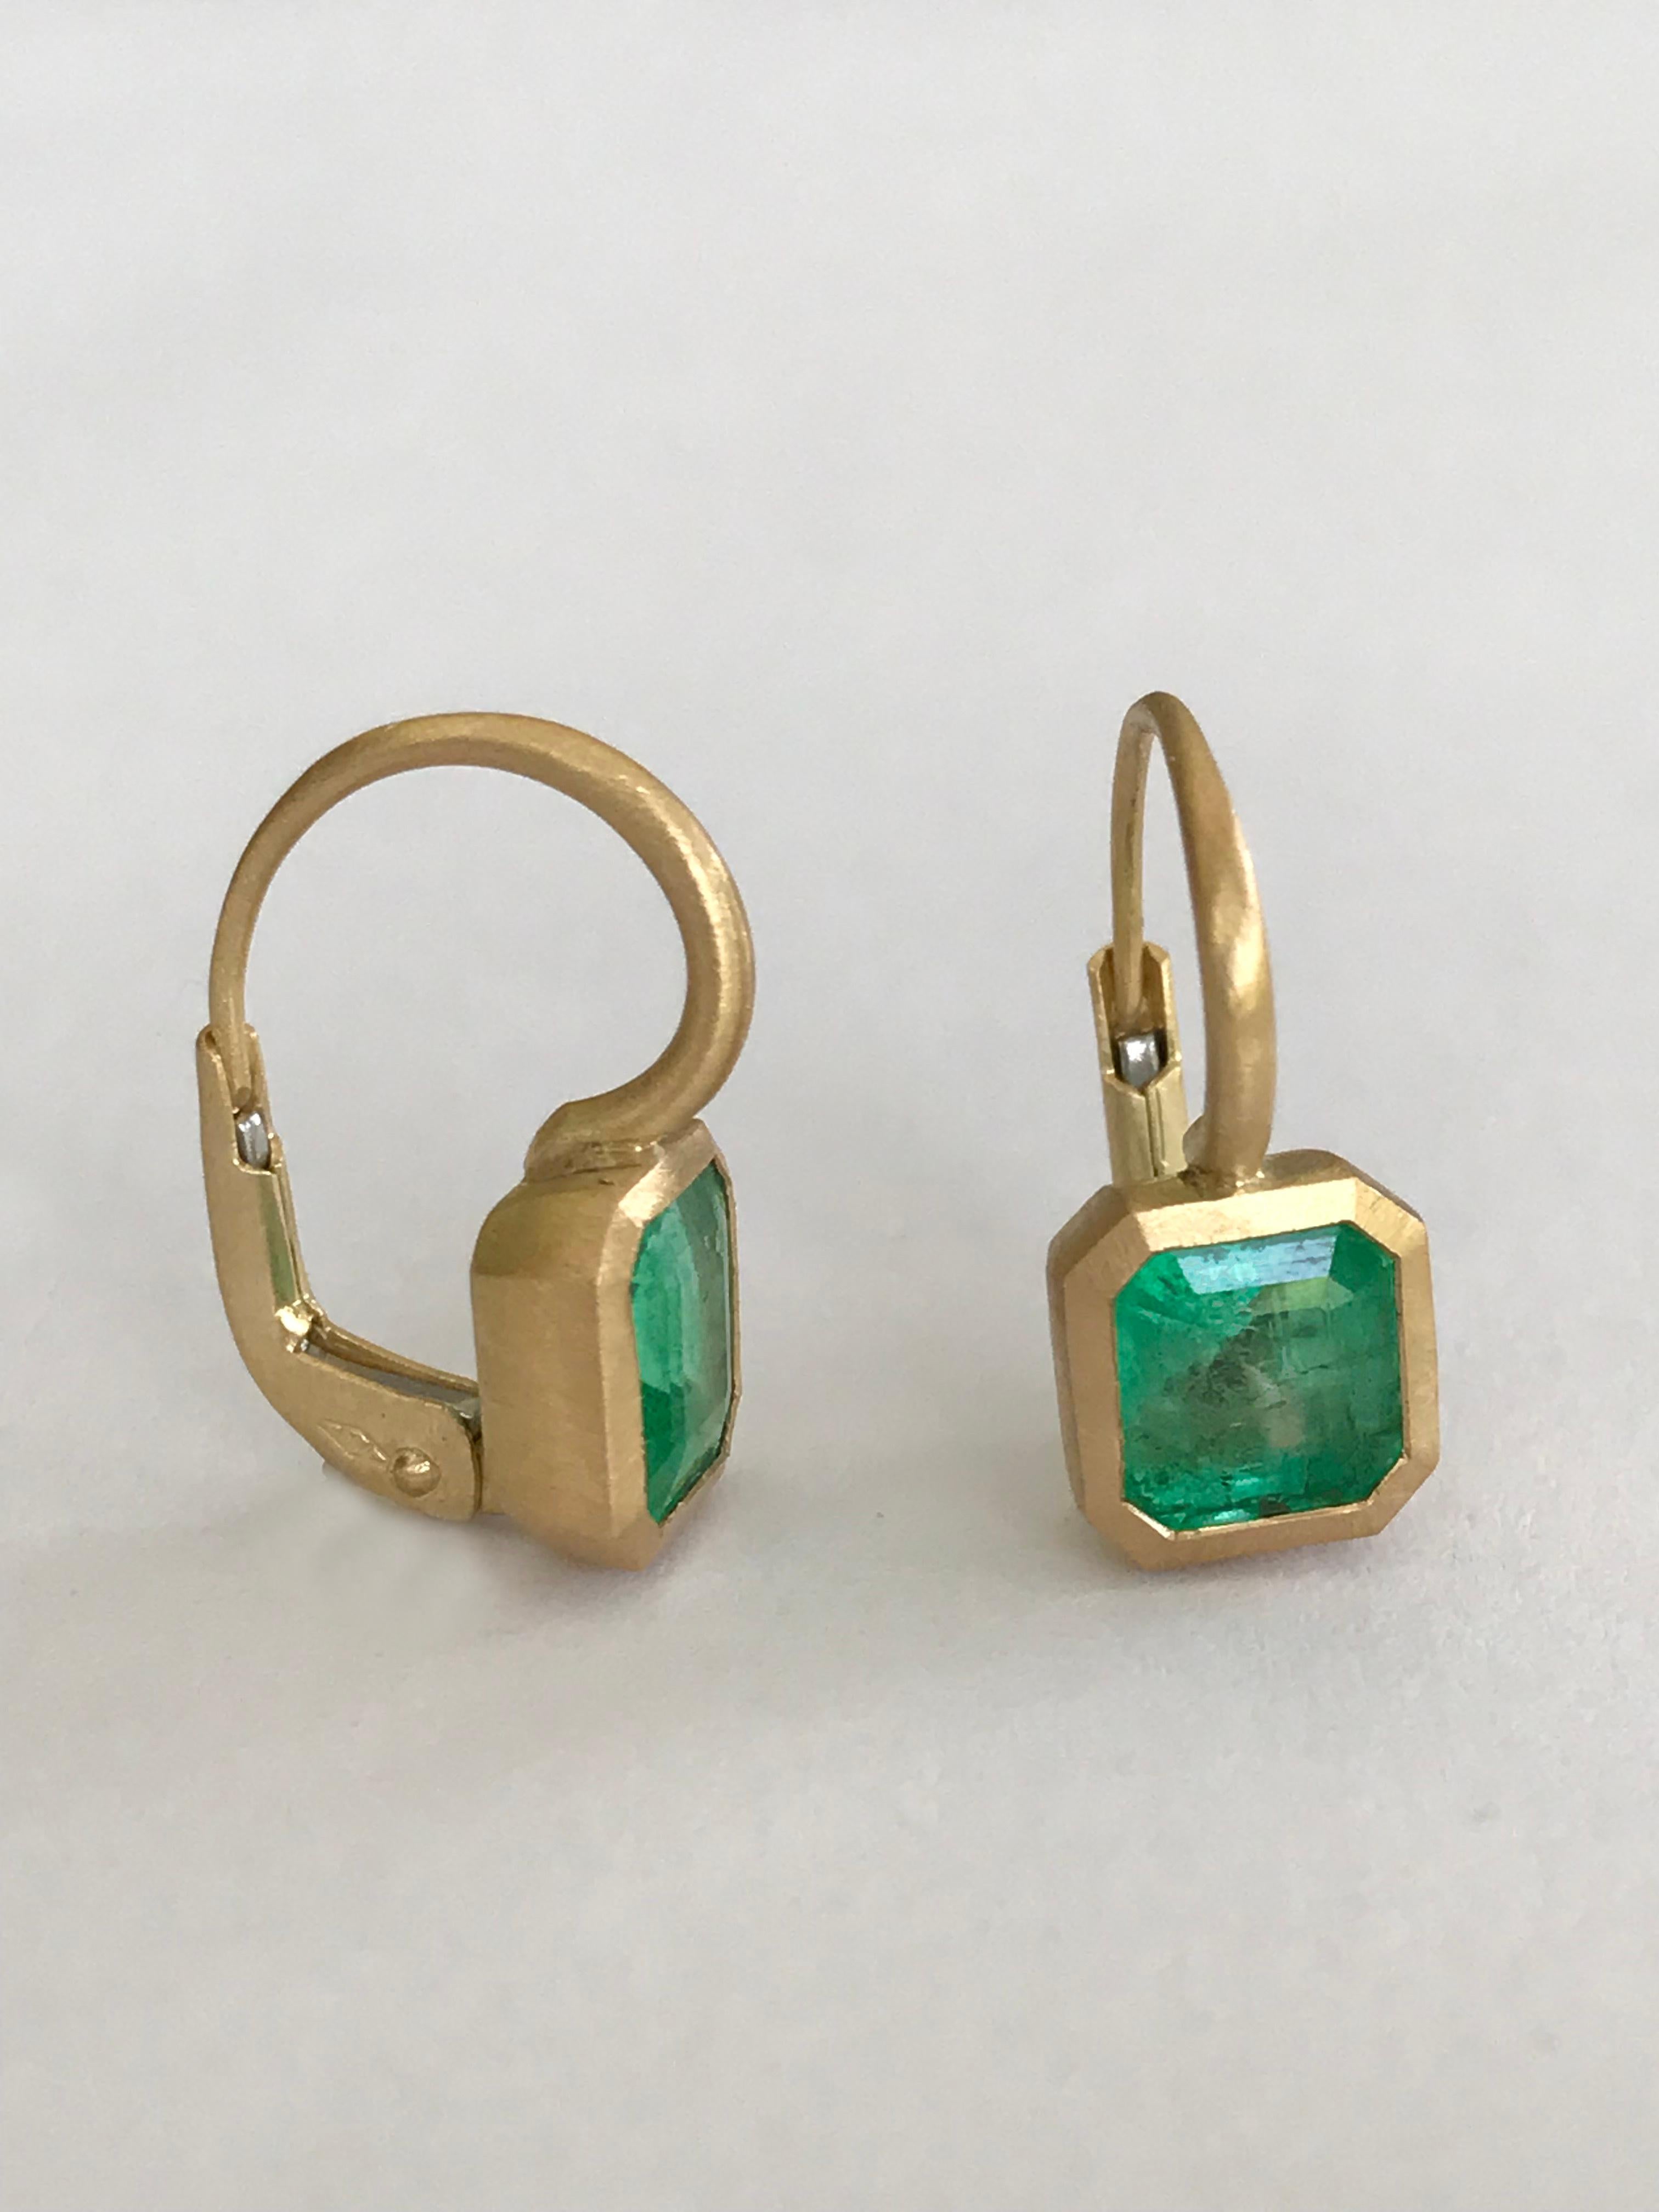 Dalben 2, 69 Carat Emerald Yellow Gold Earrings 5